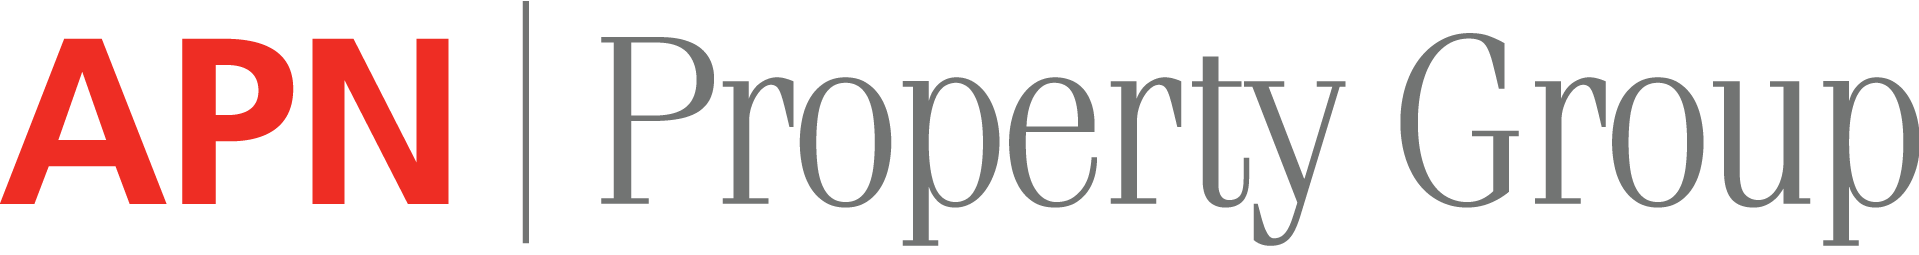 APN Property Group Logo